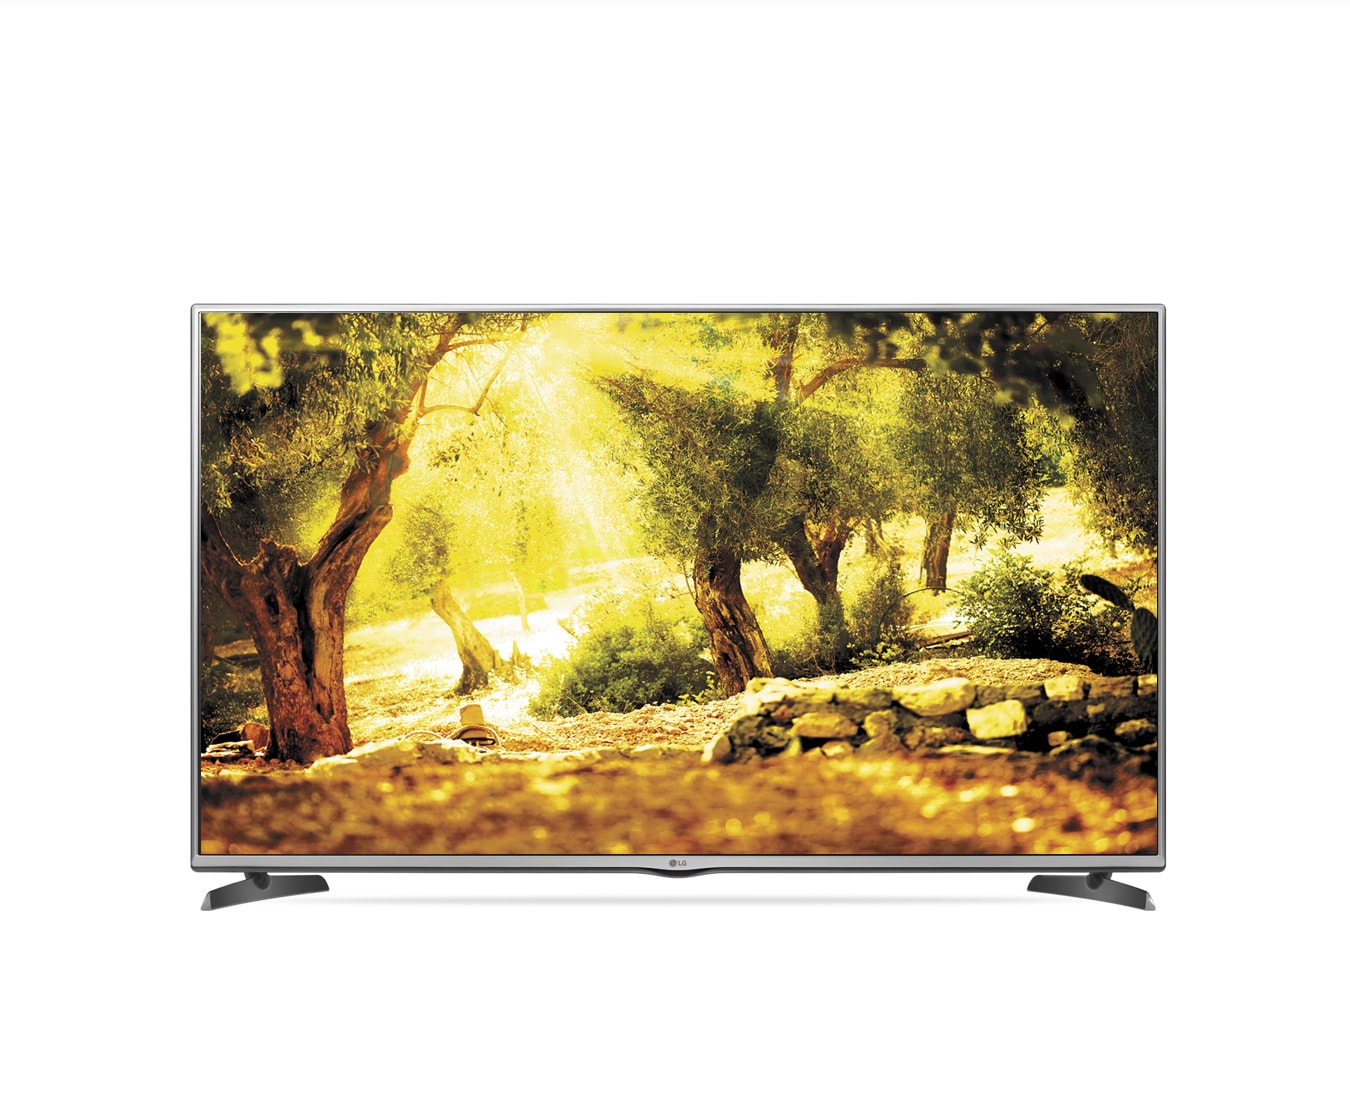 Купить телевизор в череповце. 3d led телевизор LG 32lf620u. LG 42lf653v. LG 32lf634v. Телевизор LG 40 LF 634 V.